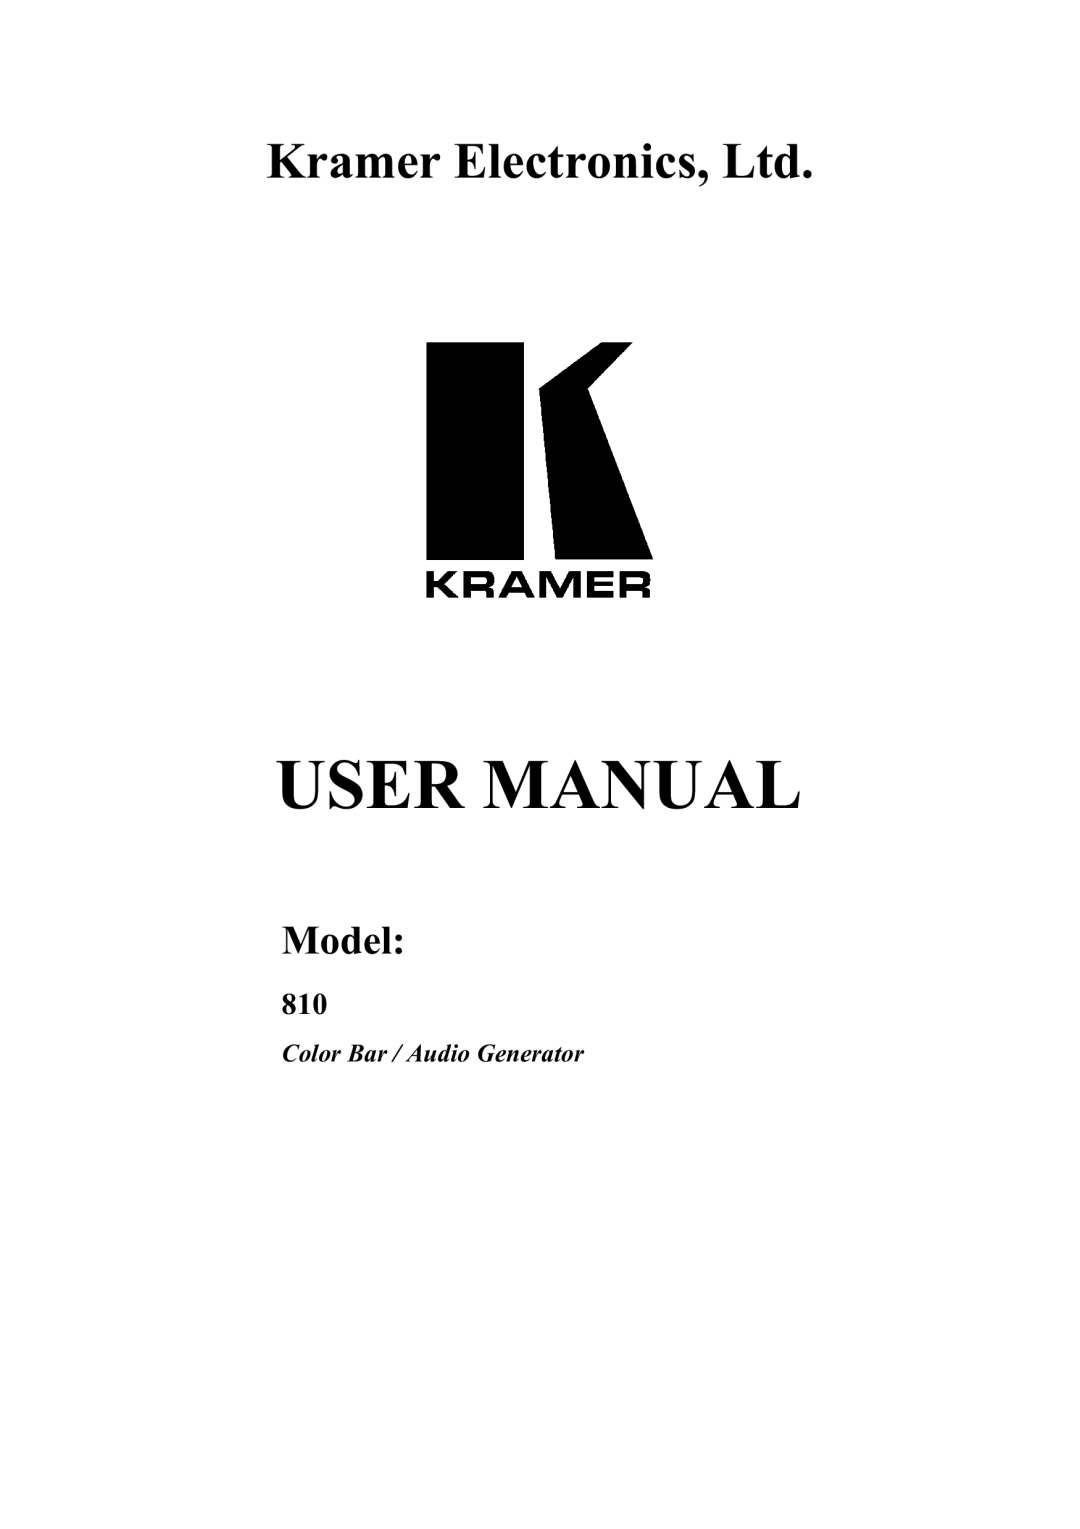 Kramer Electronics 810 manual Roru%Du$Xglr*Hqhudwru, 8650$18$, Udphuohfwurqlfv/Wg, 0RGHO 